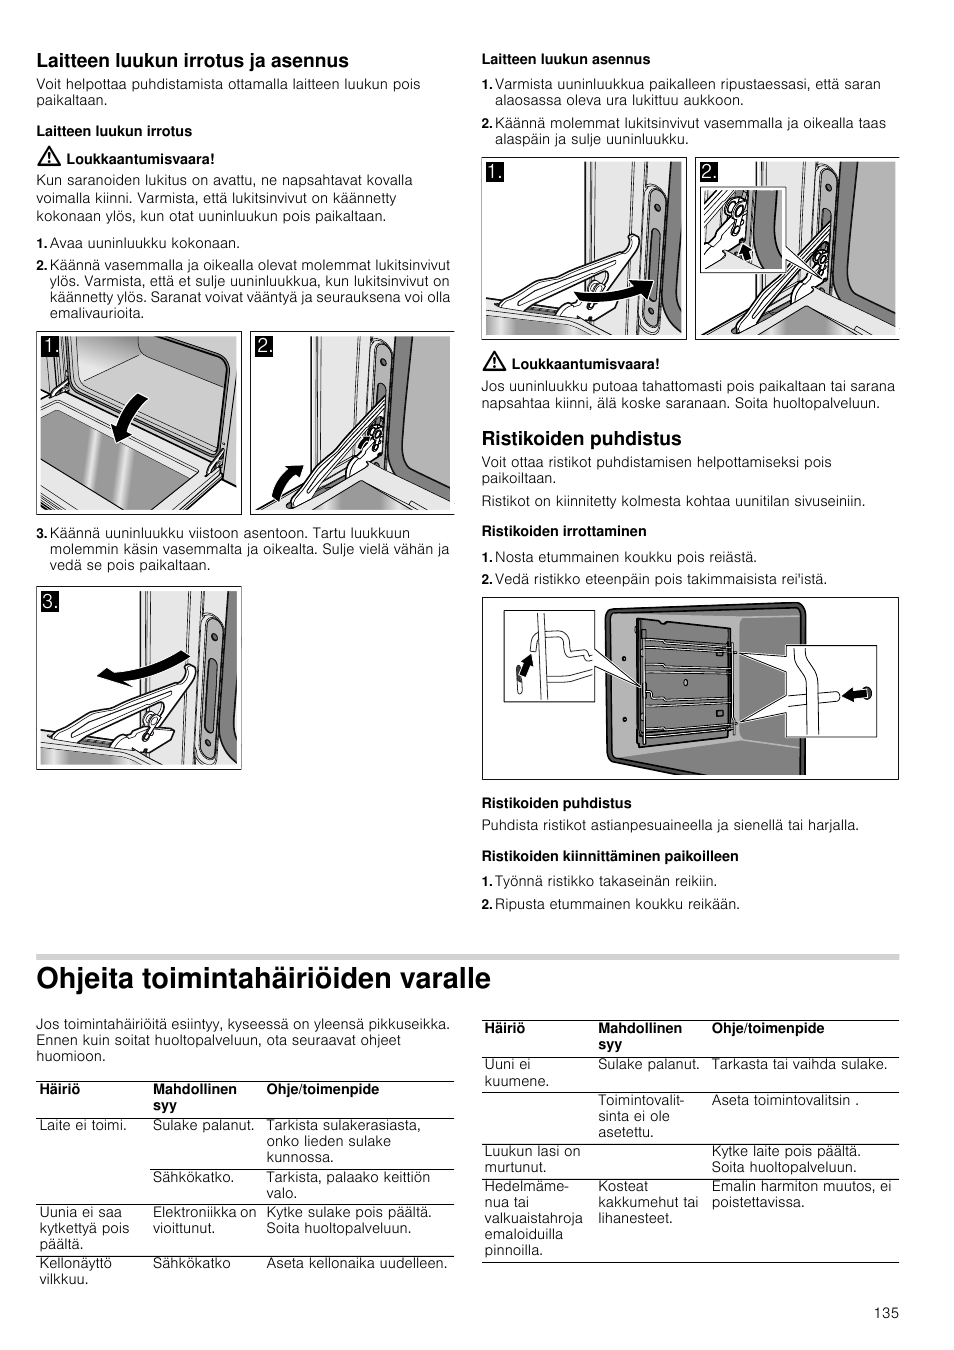 Laitteen luukun irrotus ja asennus, Laitteen luukun irrotus,  Loukkaantumisvaara | Siemens HB933R51 User Manual | Page 134 / 160